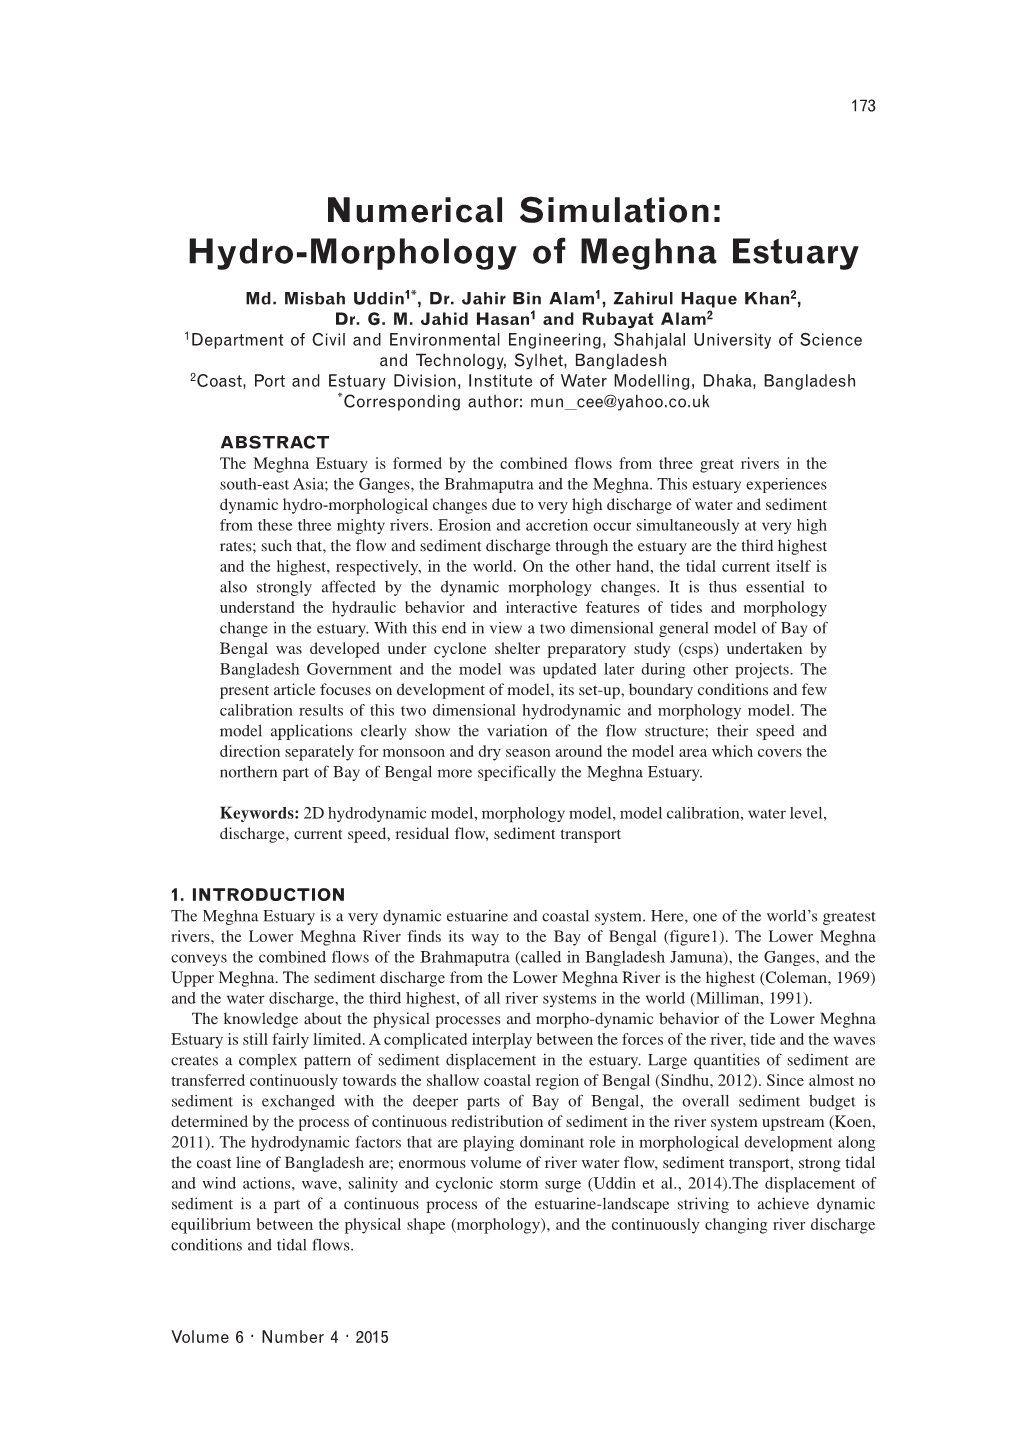 Numerical Simulation: Hydro-Morphology of Meghna Estuary